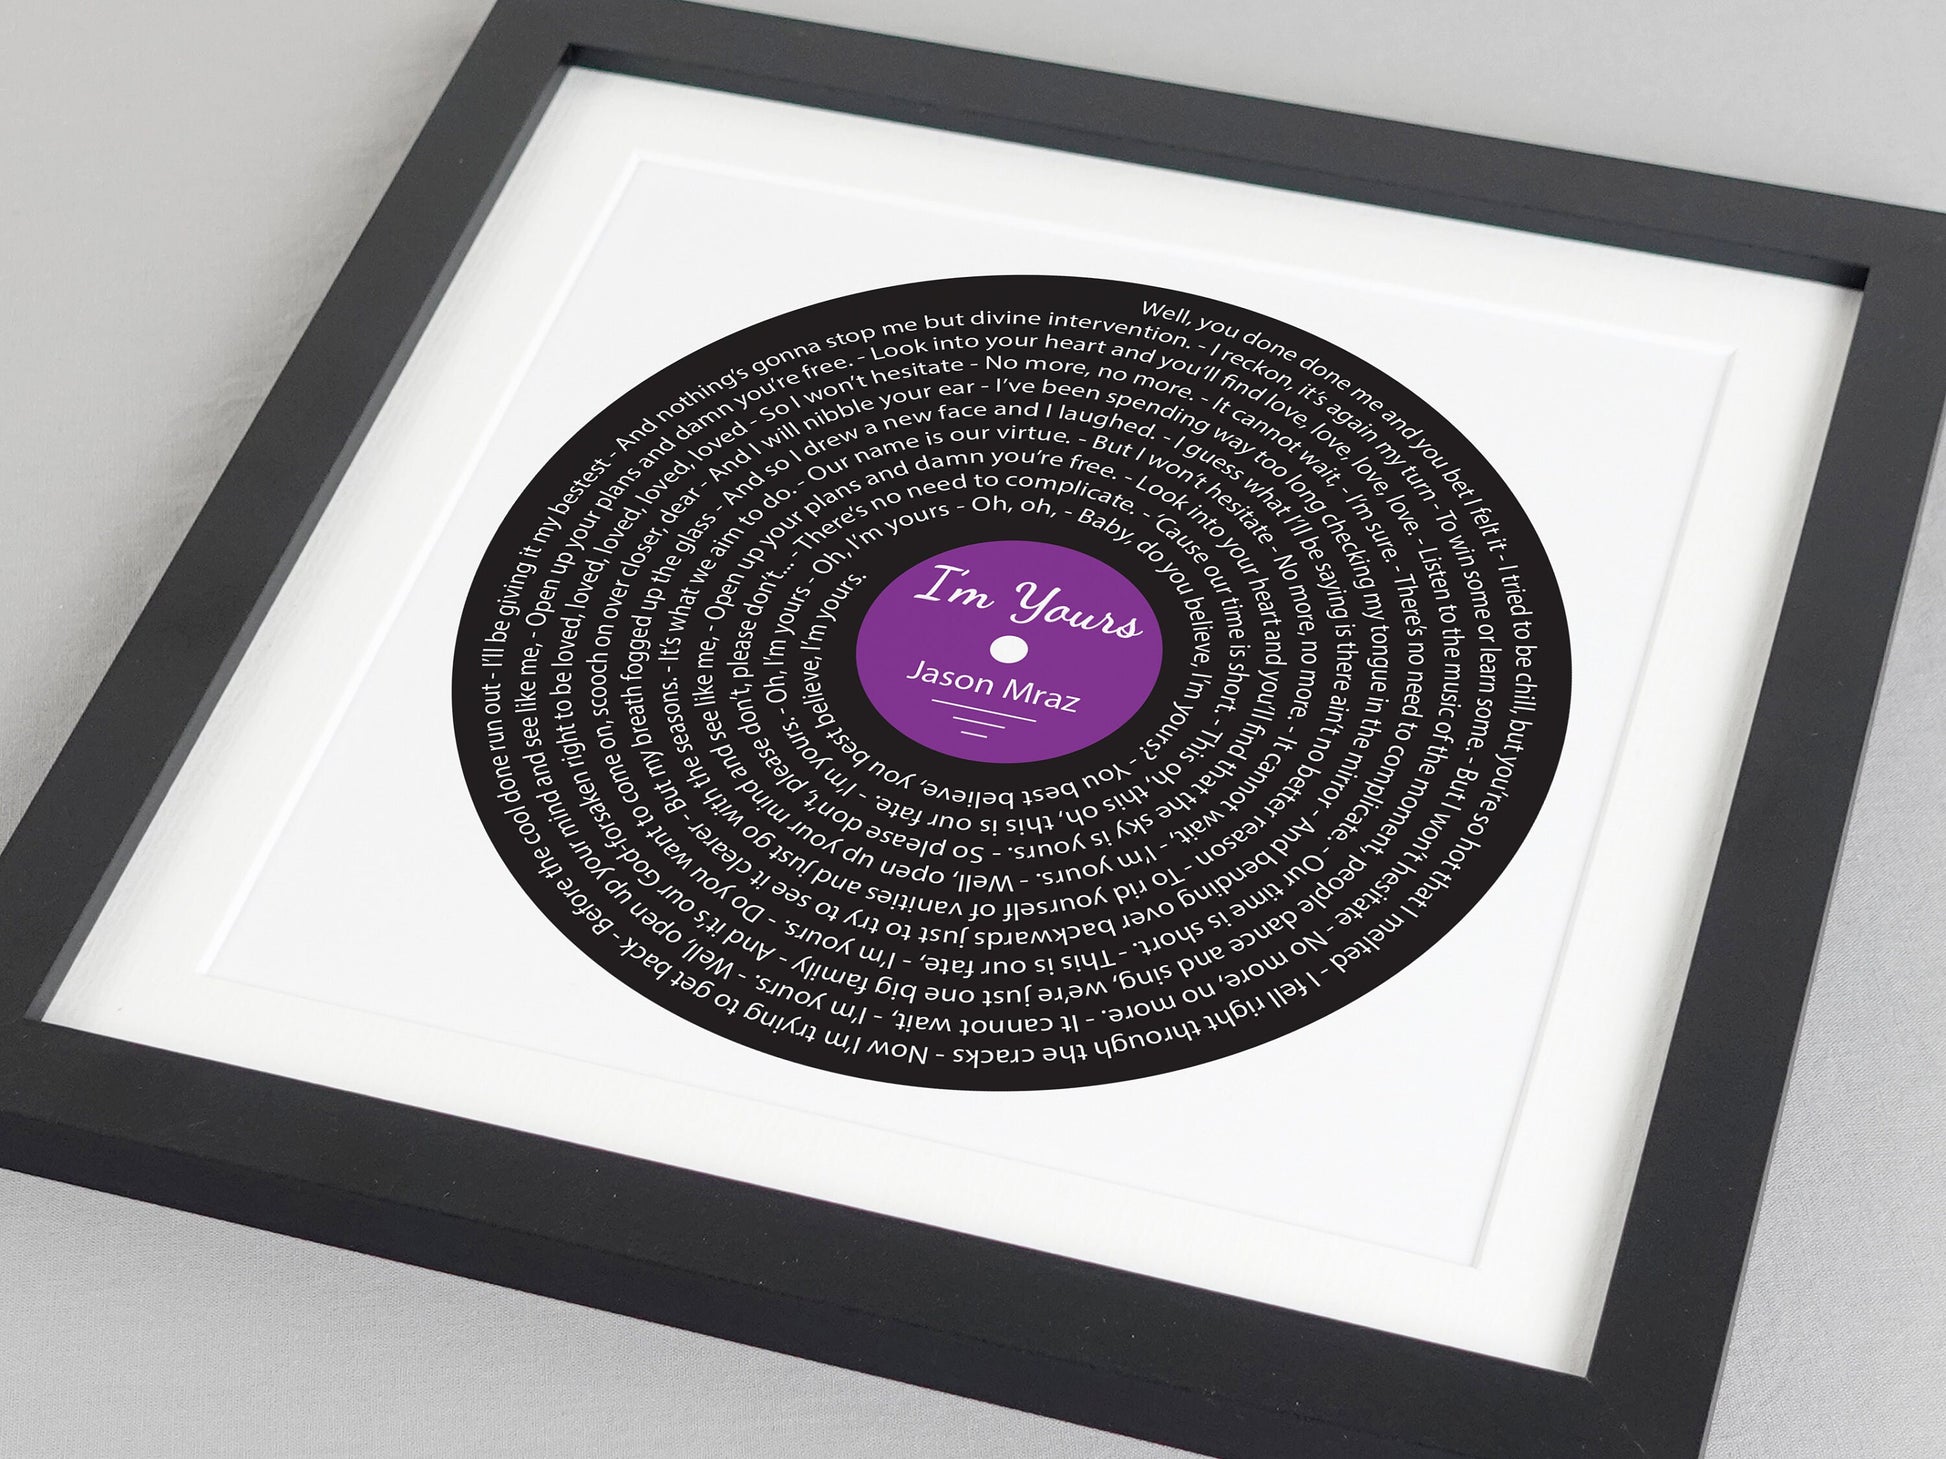 I'm Yours - Jason Mraz | Song lyric gift | Vinyl record print | First Dance present | Wedding gift | Anniversary present VA009